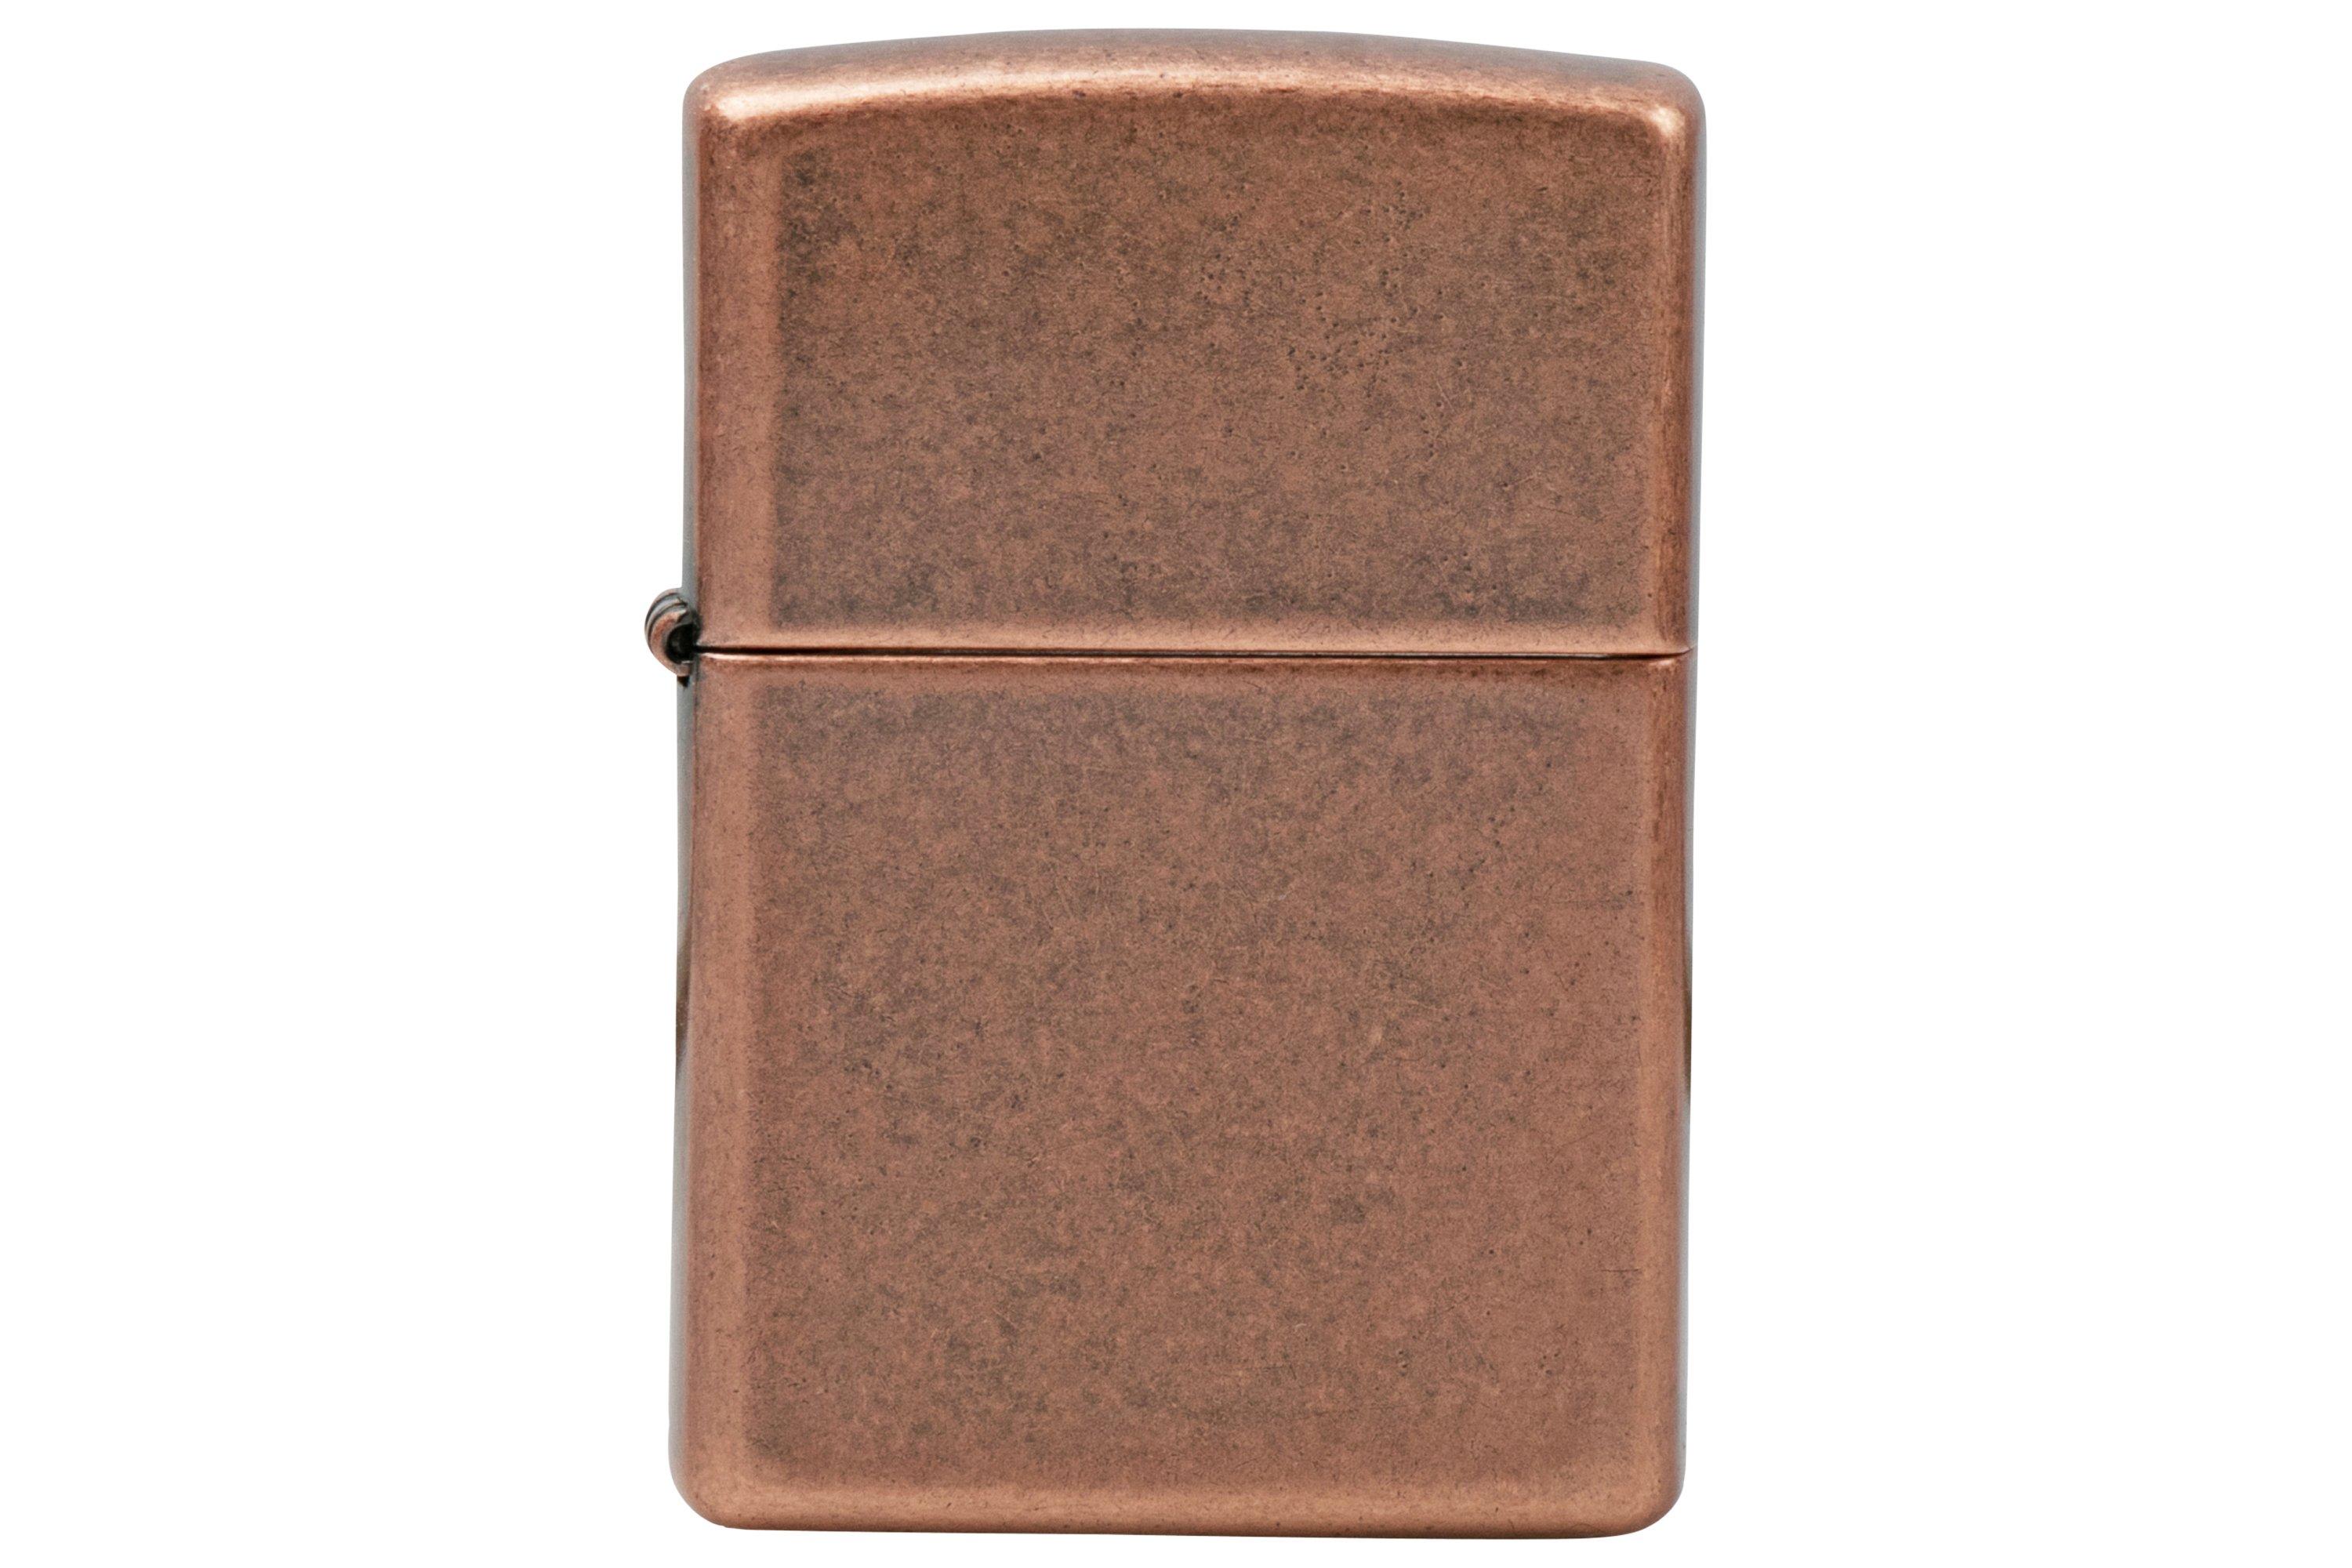 Zippo Antique Copper 60003422, lighter